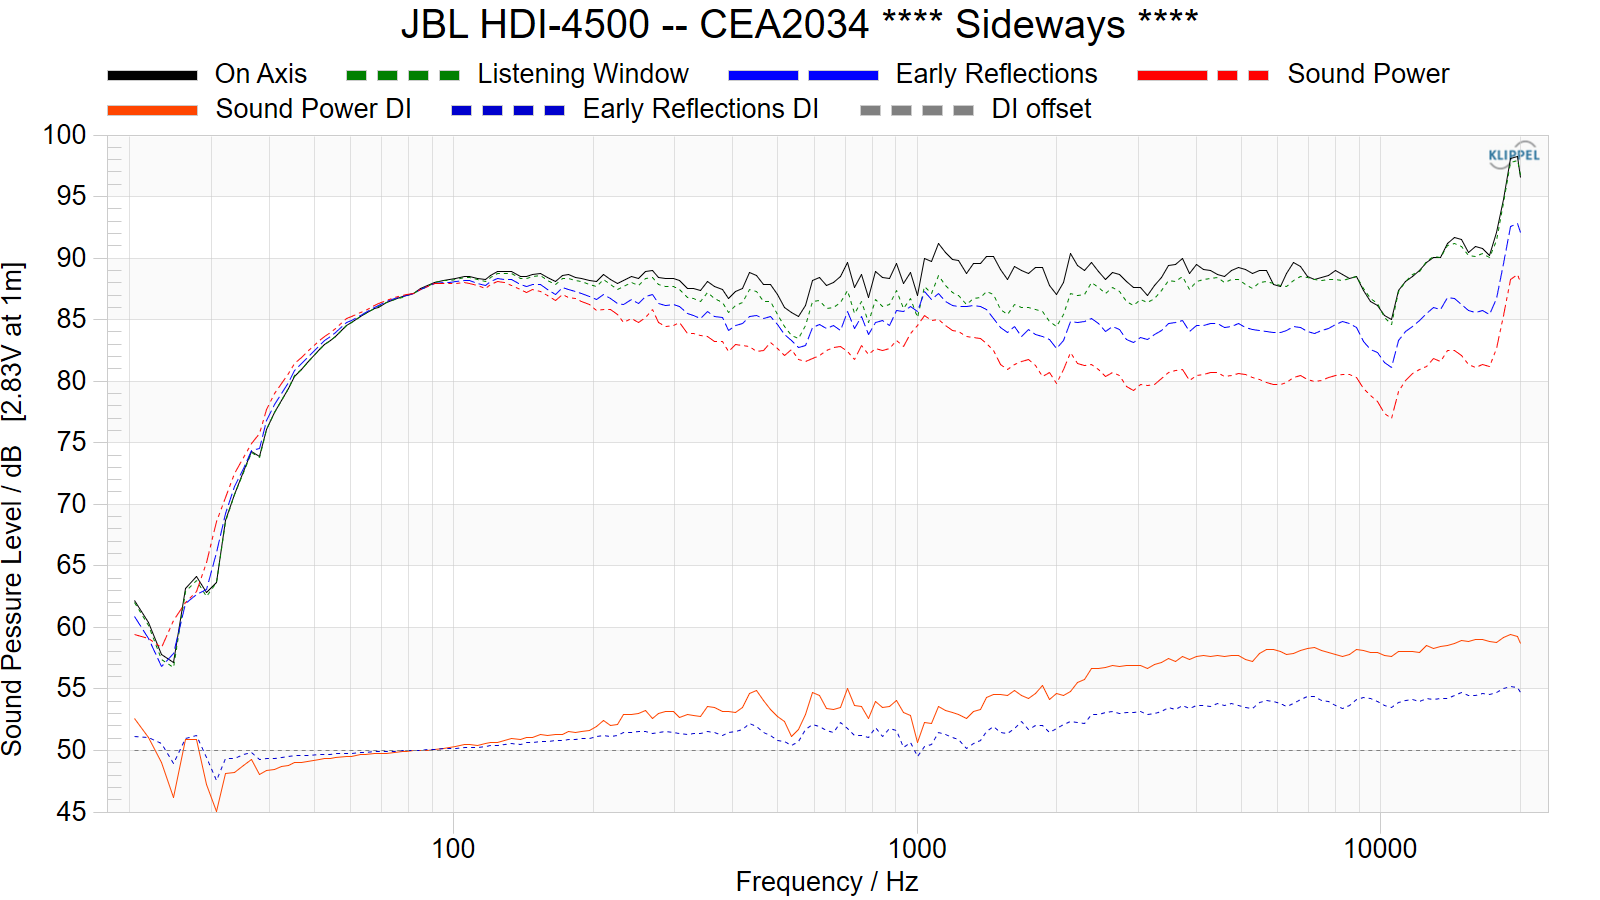 JBL HDI-4500 -- CEA2034  Sideways.png